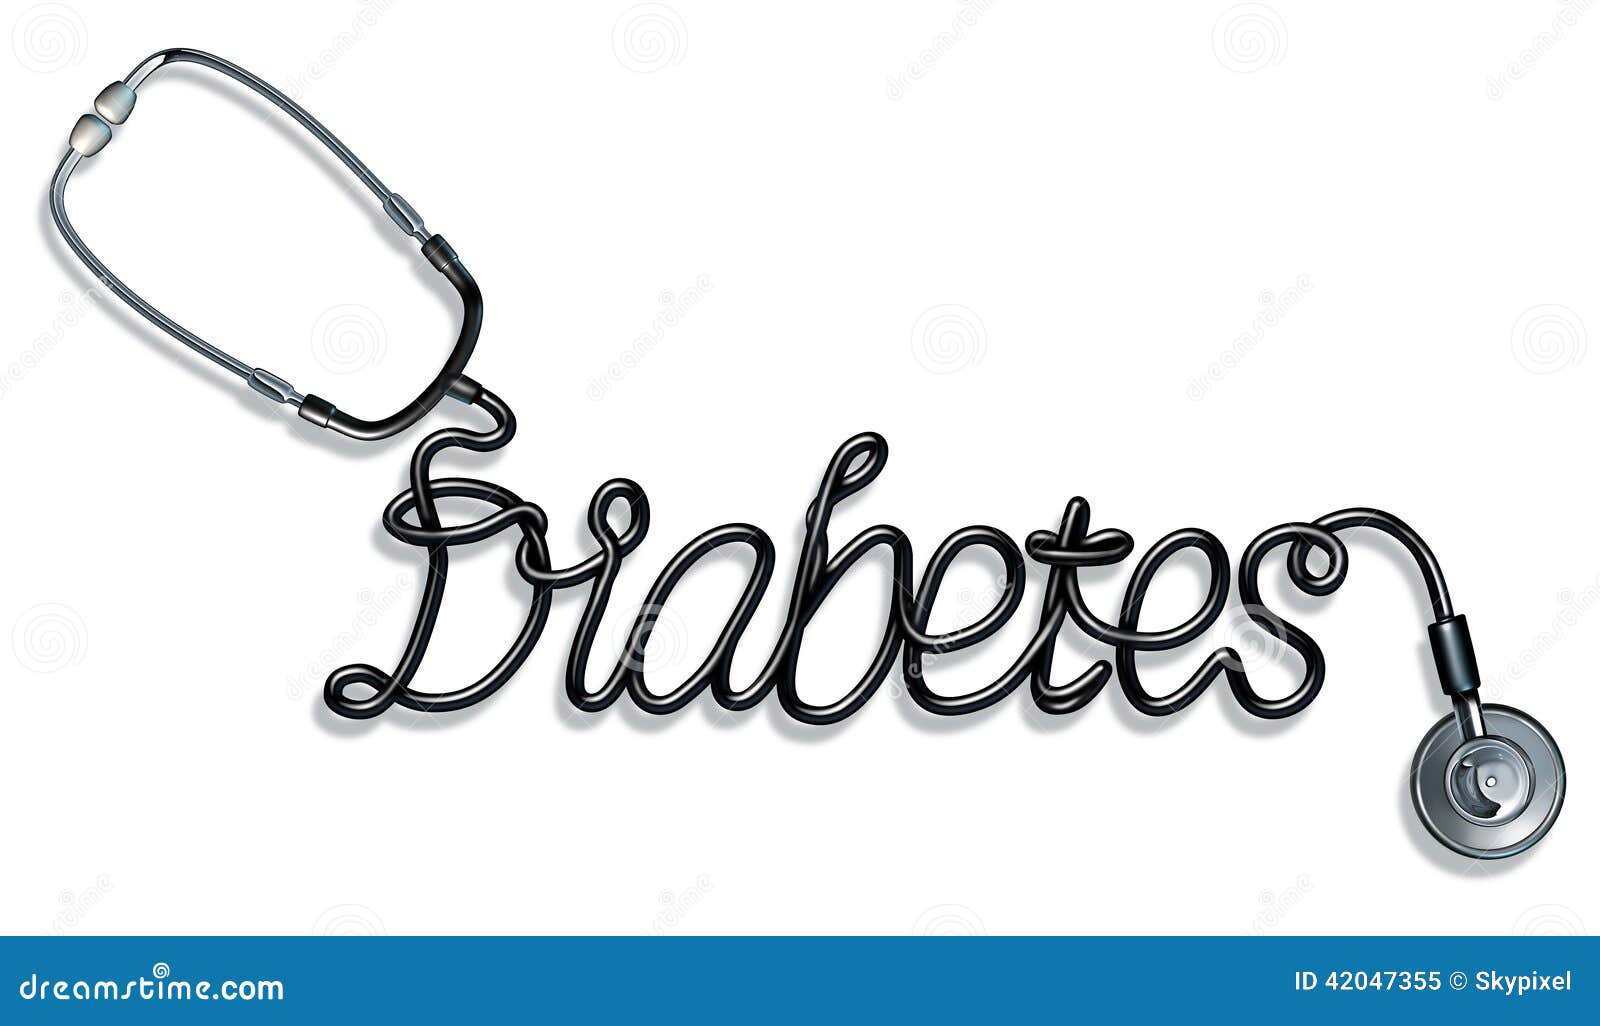 clipart for diabetes education - photo #14